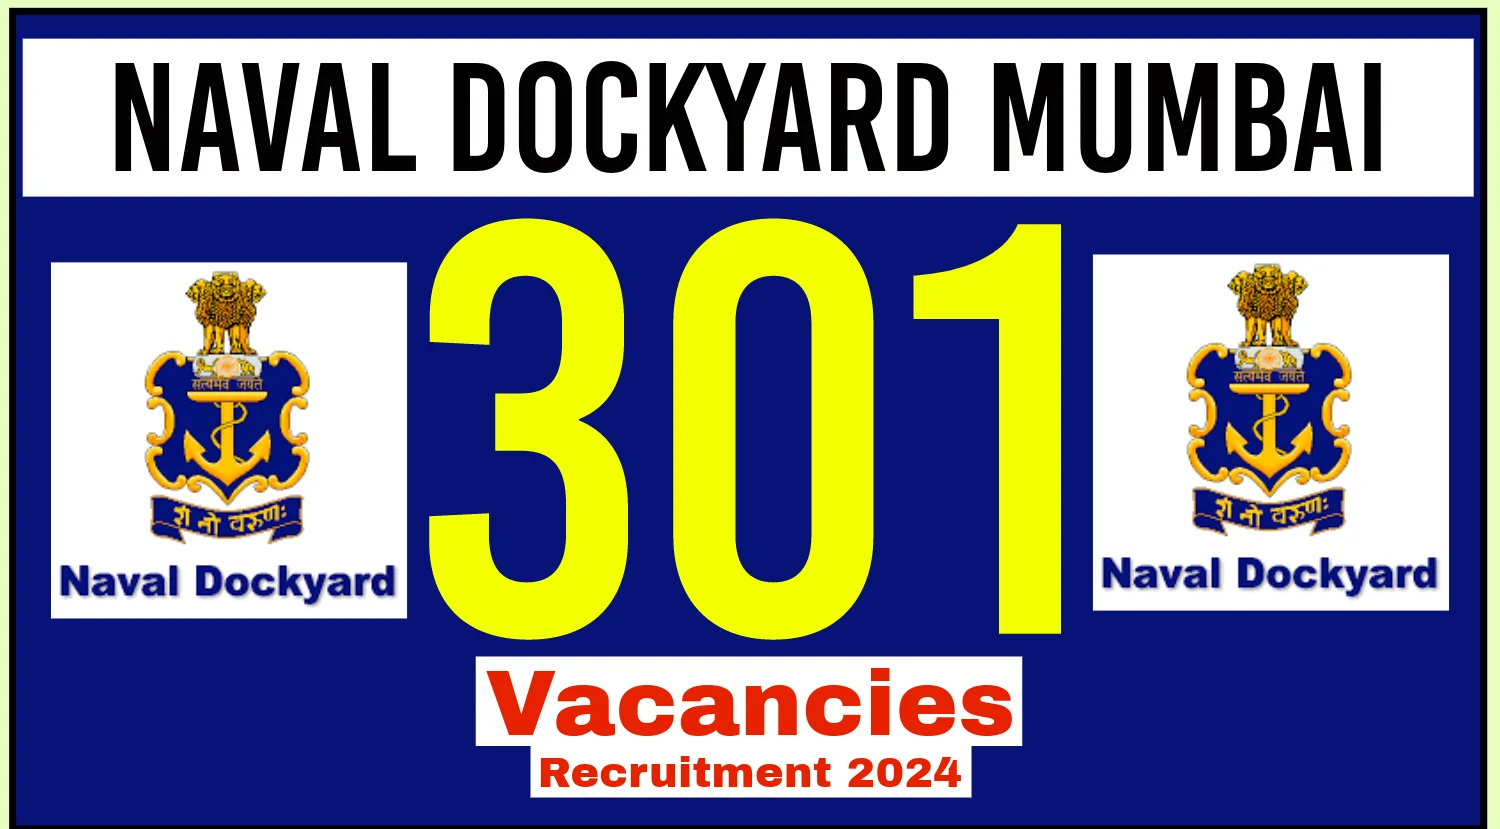 Naval Dockyard Mumbai Apprentice recruitment 2024